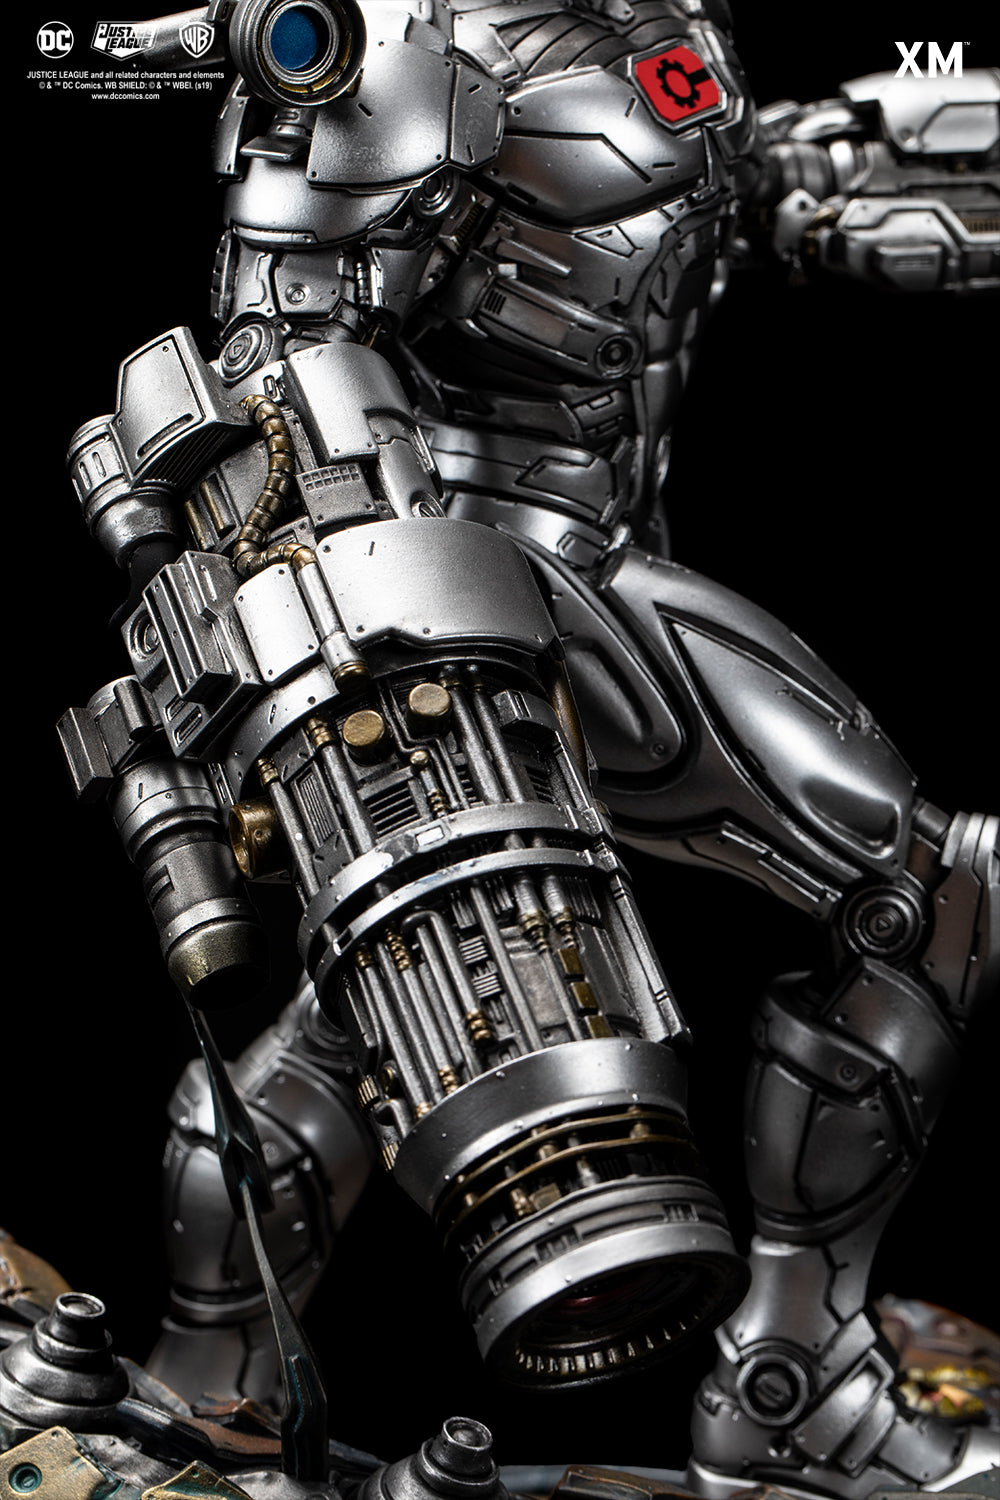 XM Studios - DC Premium Collectibles - Rebirth - Cyborg (1/6 Scale) - Marvelous Toys